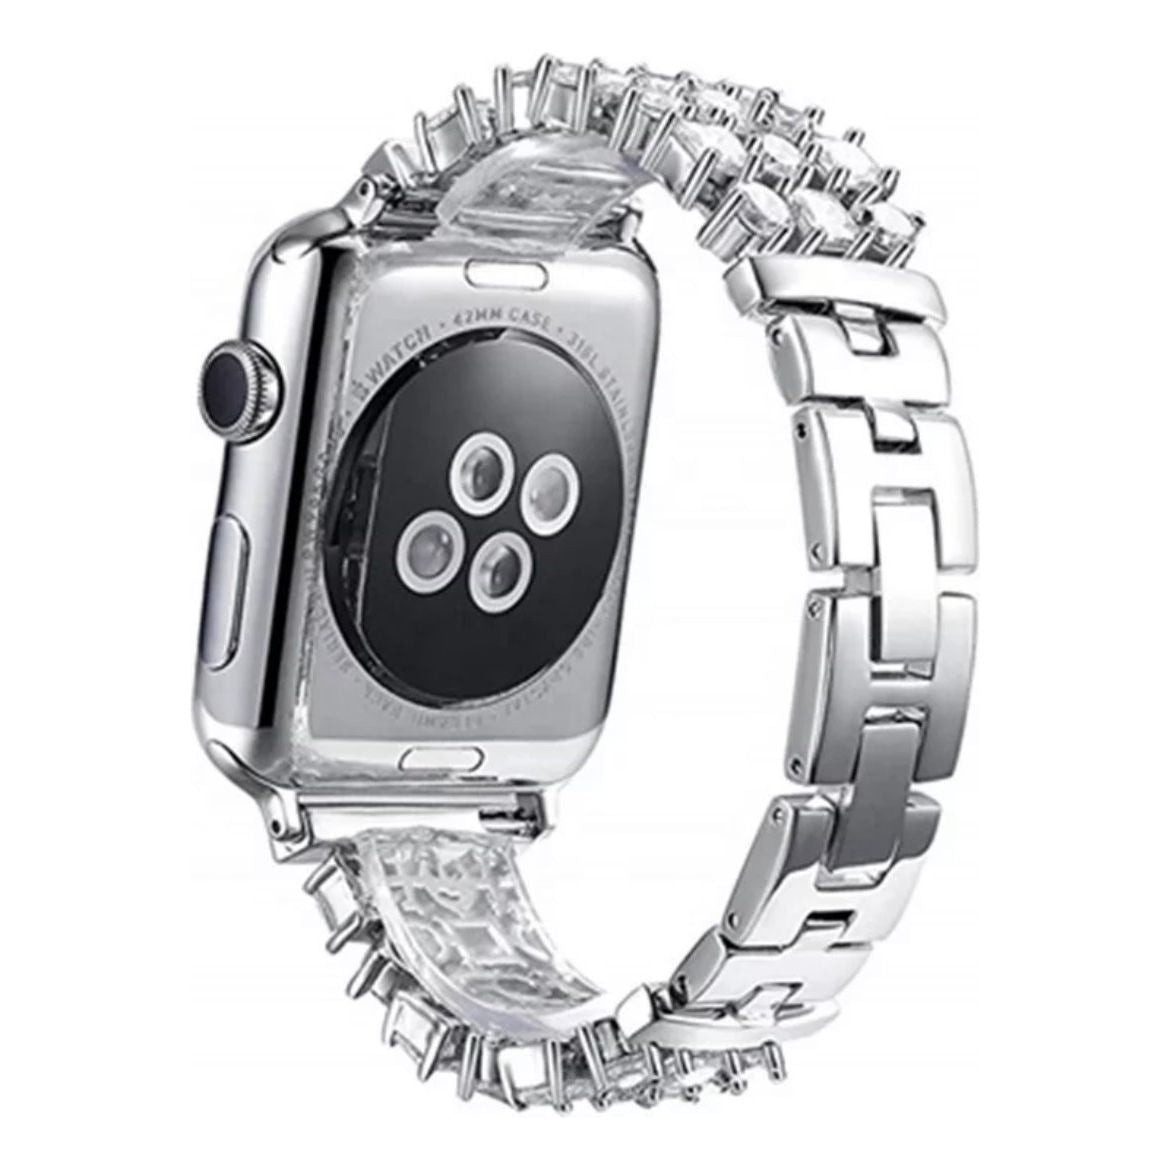 CZ Diamond Link Apple Watch Band